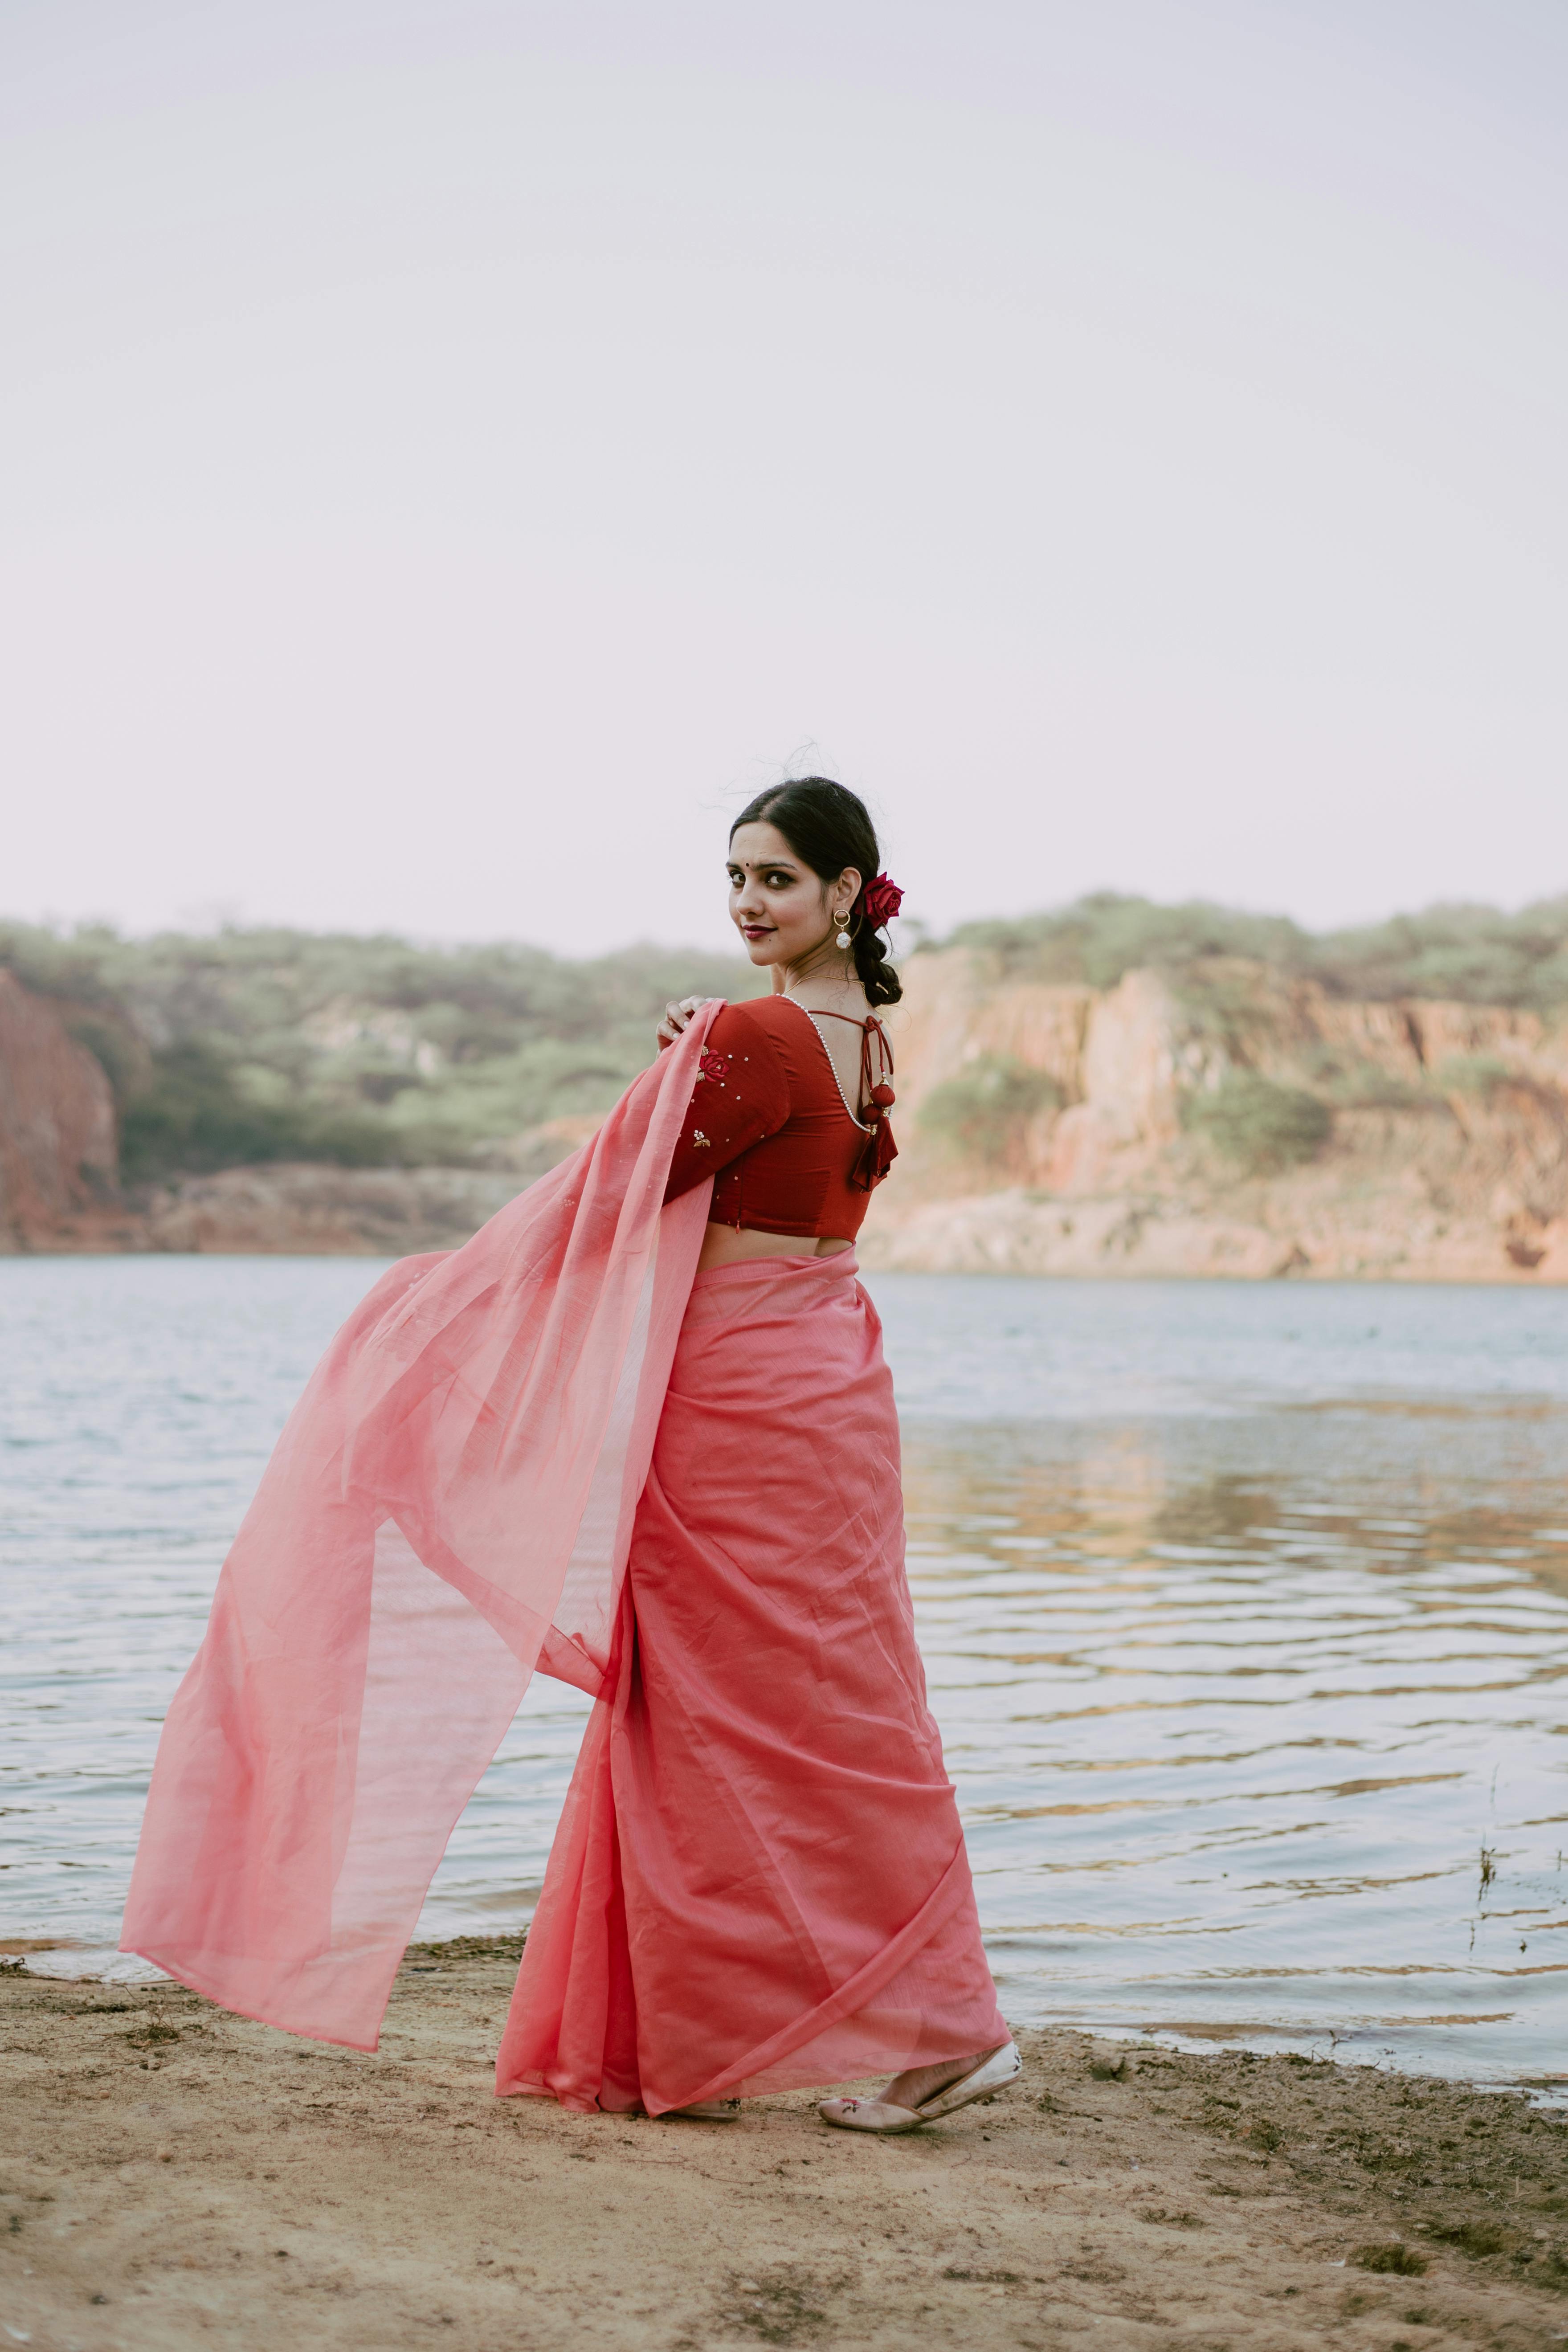 Ethnic female in traditional sari dress on shore of lake · Free Stock Photo